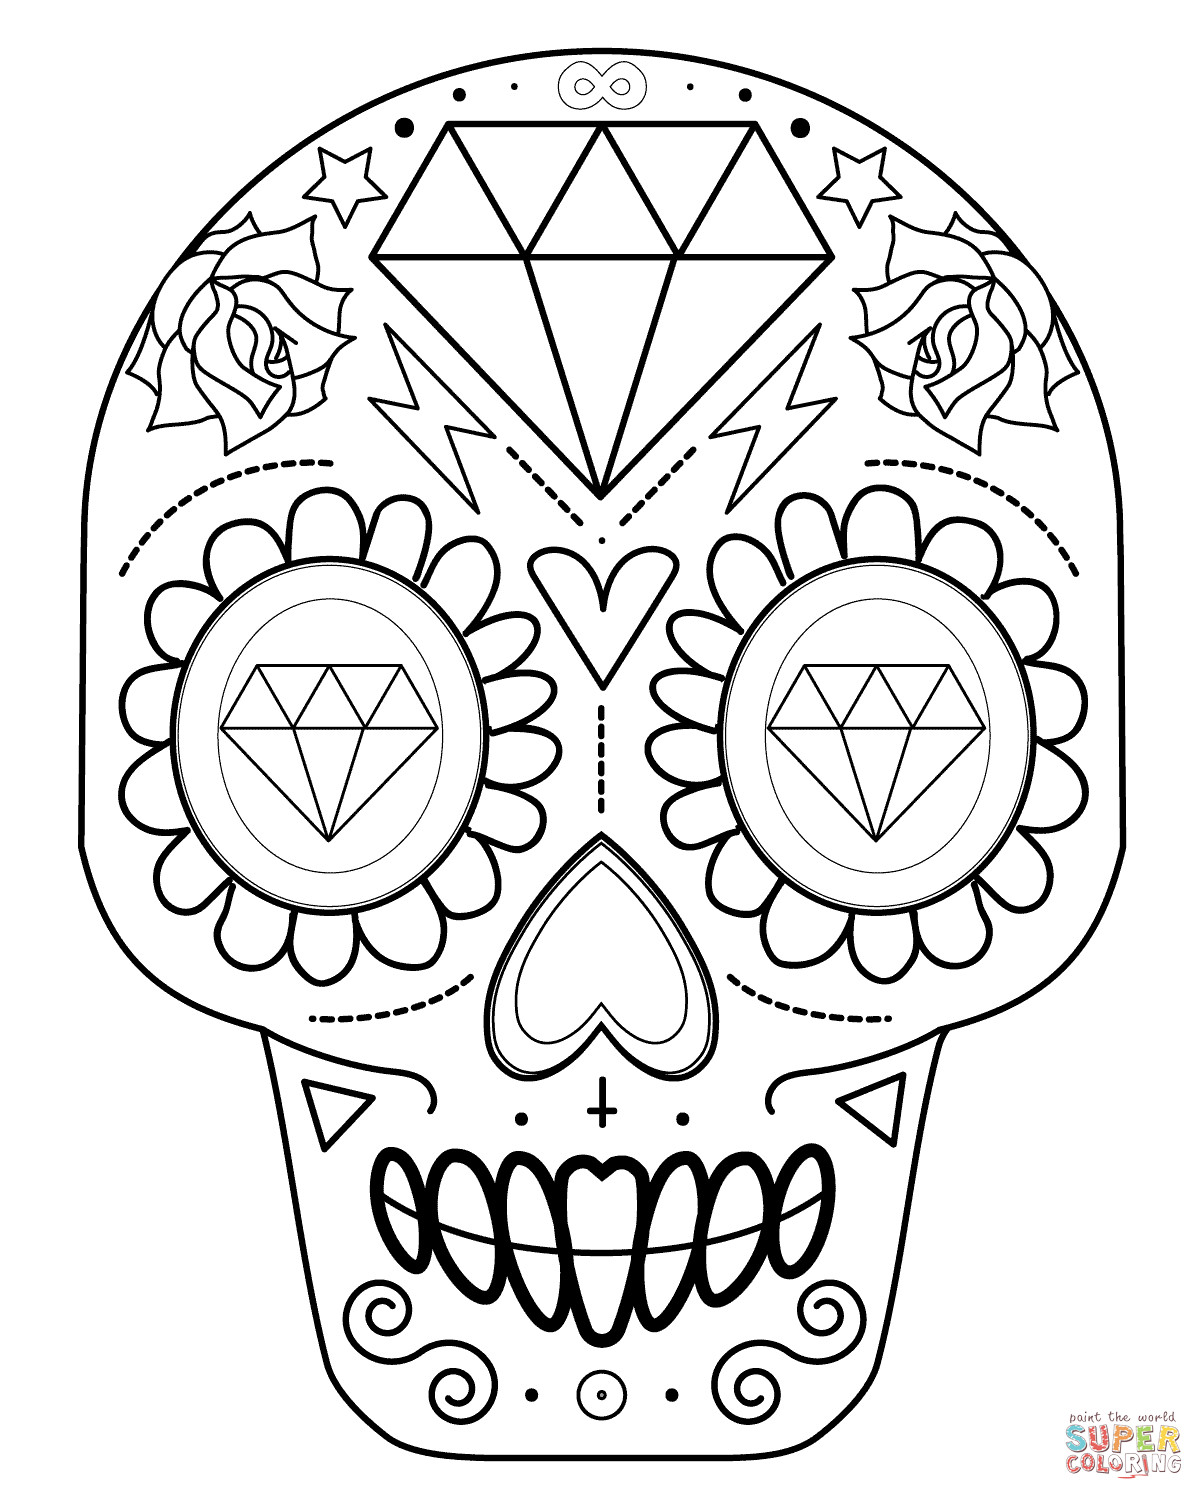 Printable Sugar Skull Coloring Pages
 Sugar Skull with Diamonds coloring page